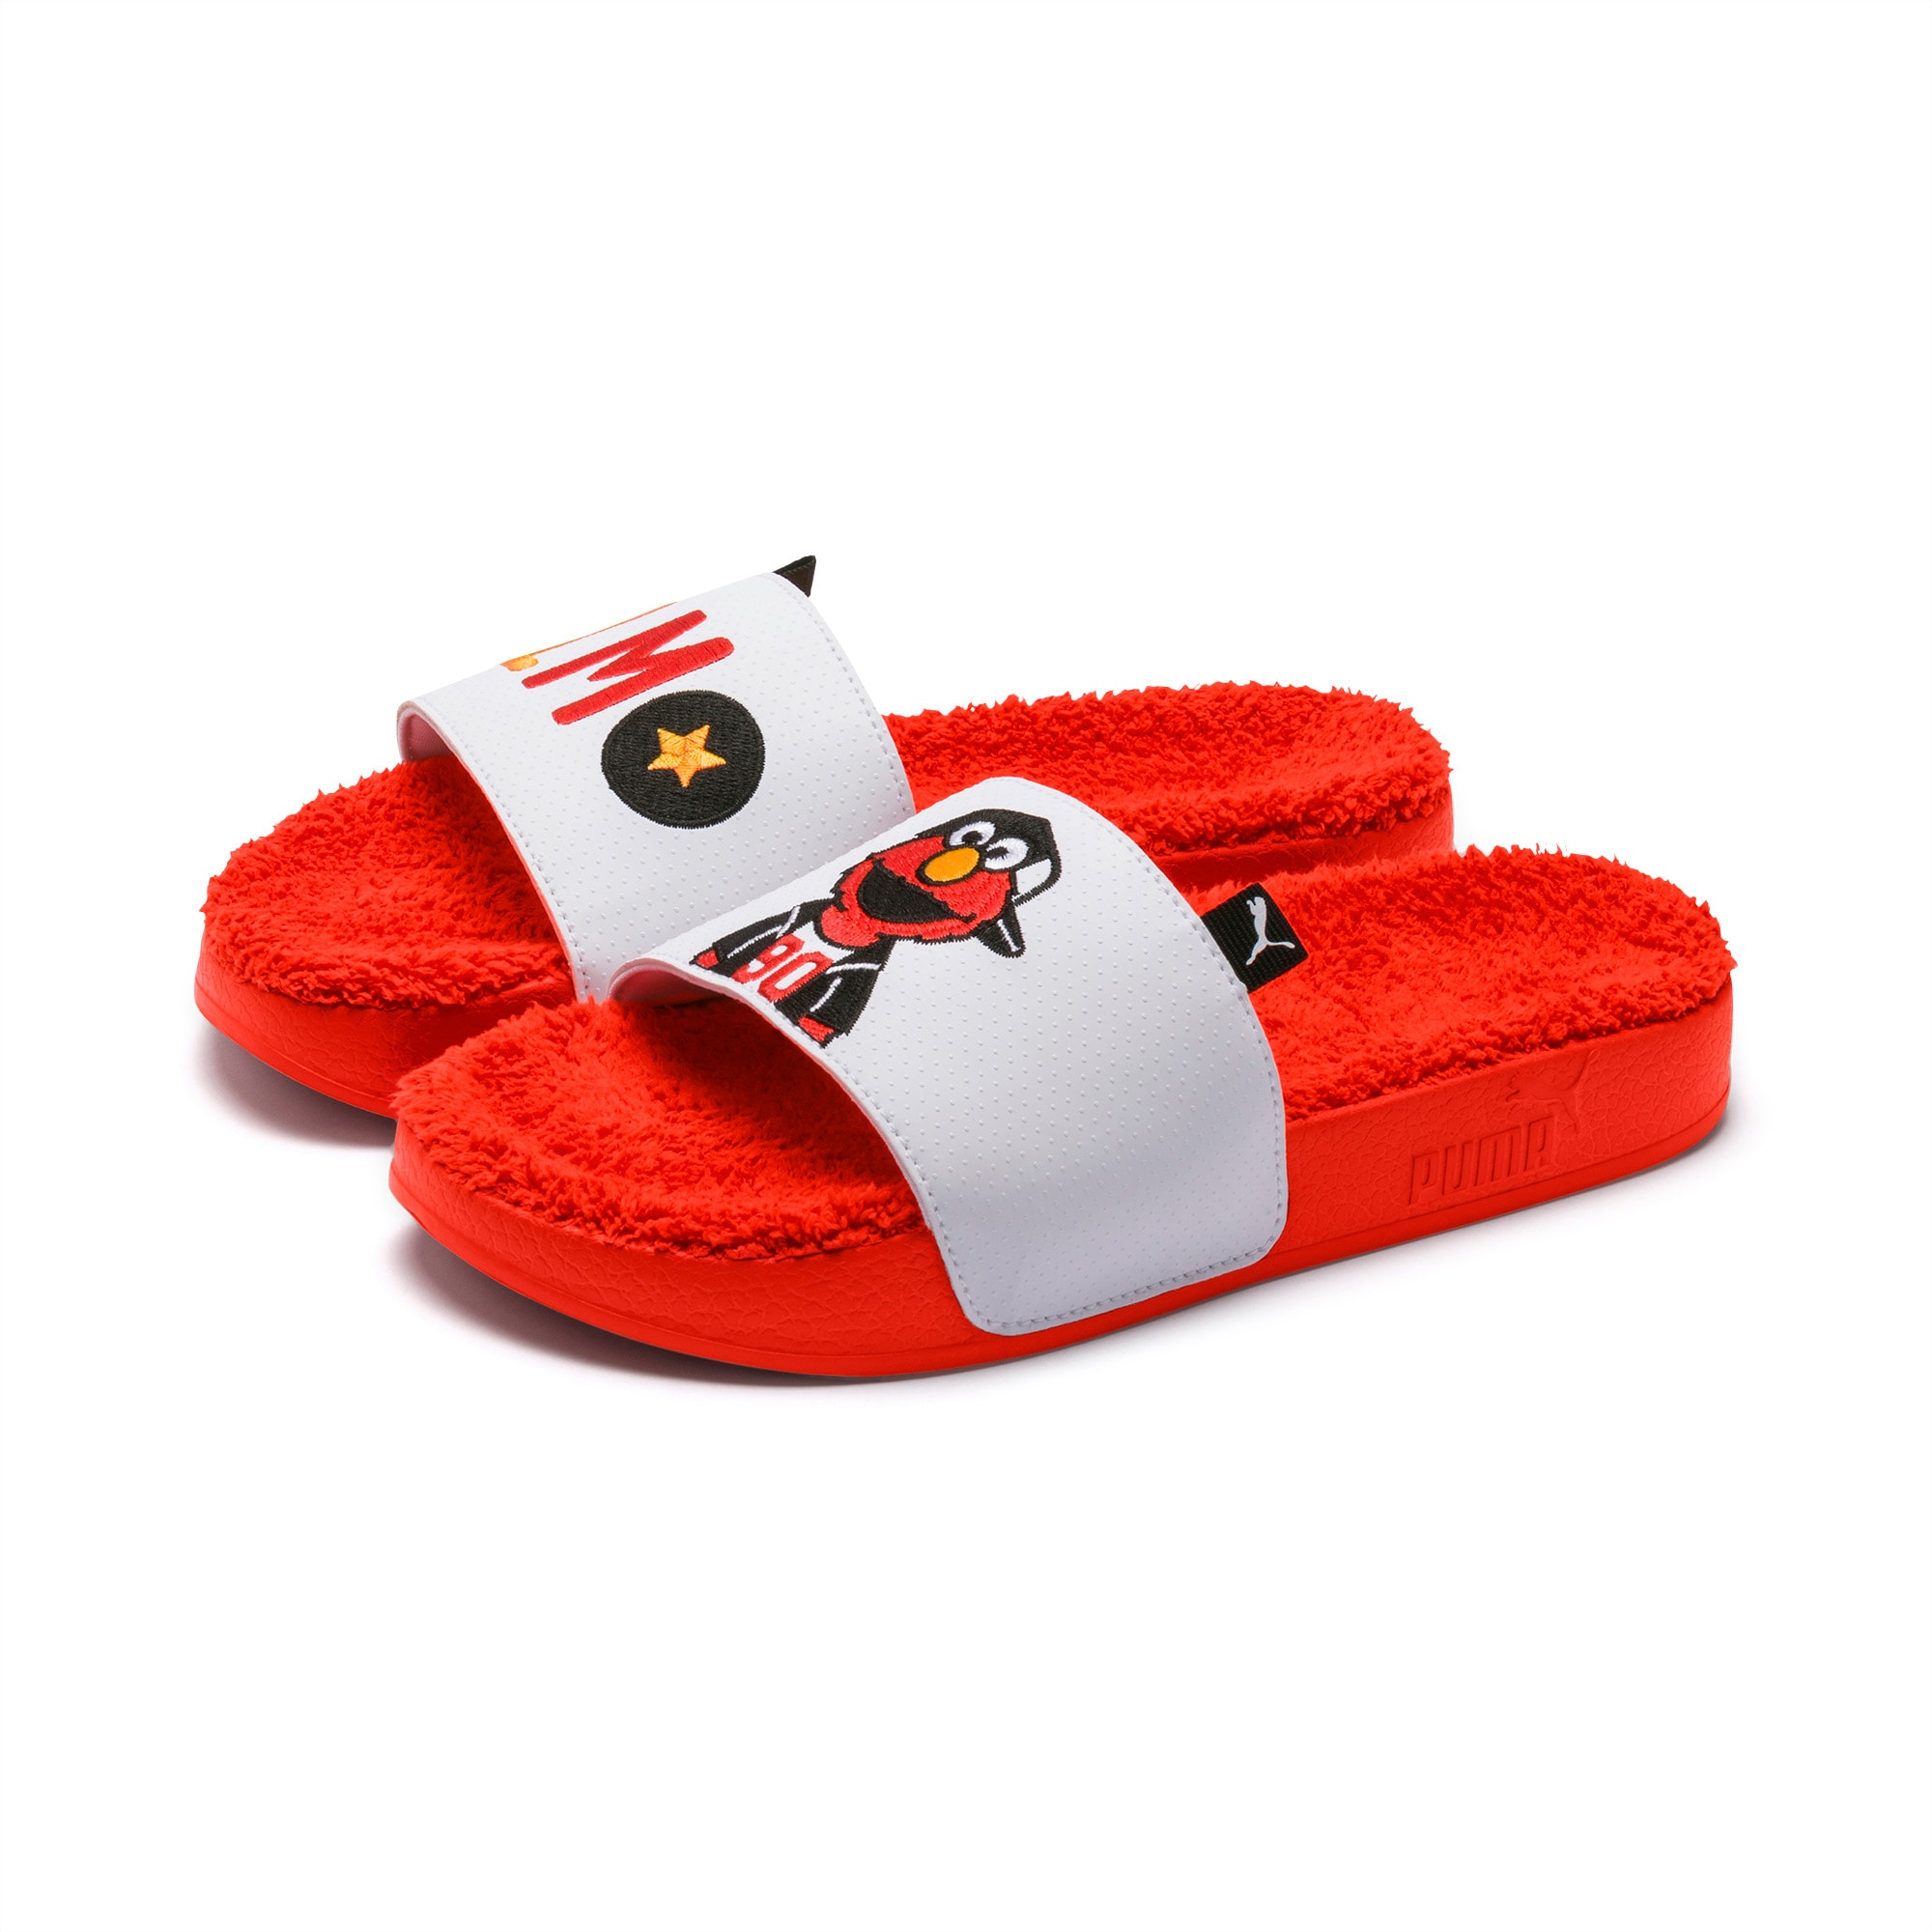 puma elmo slippers - 57% OFF 